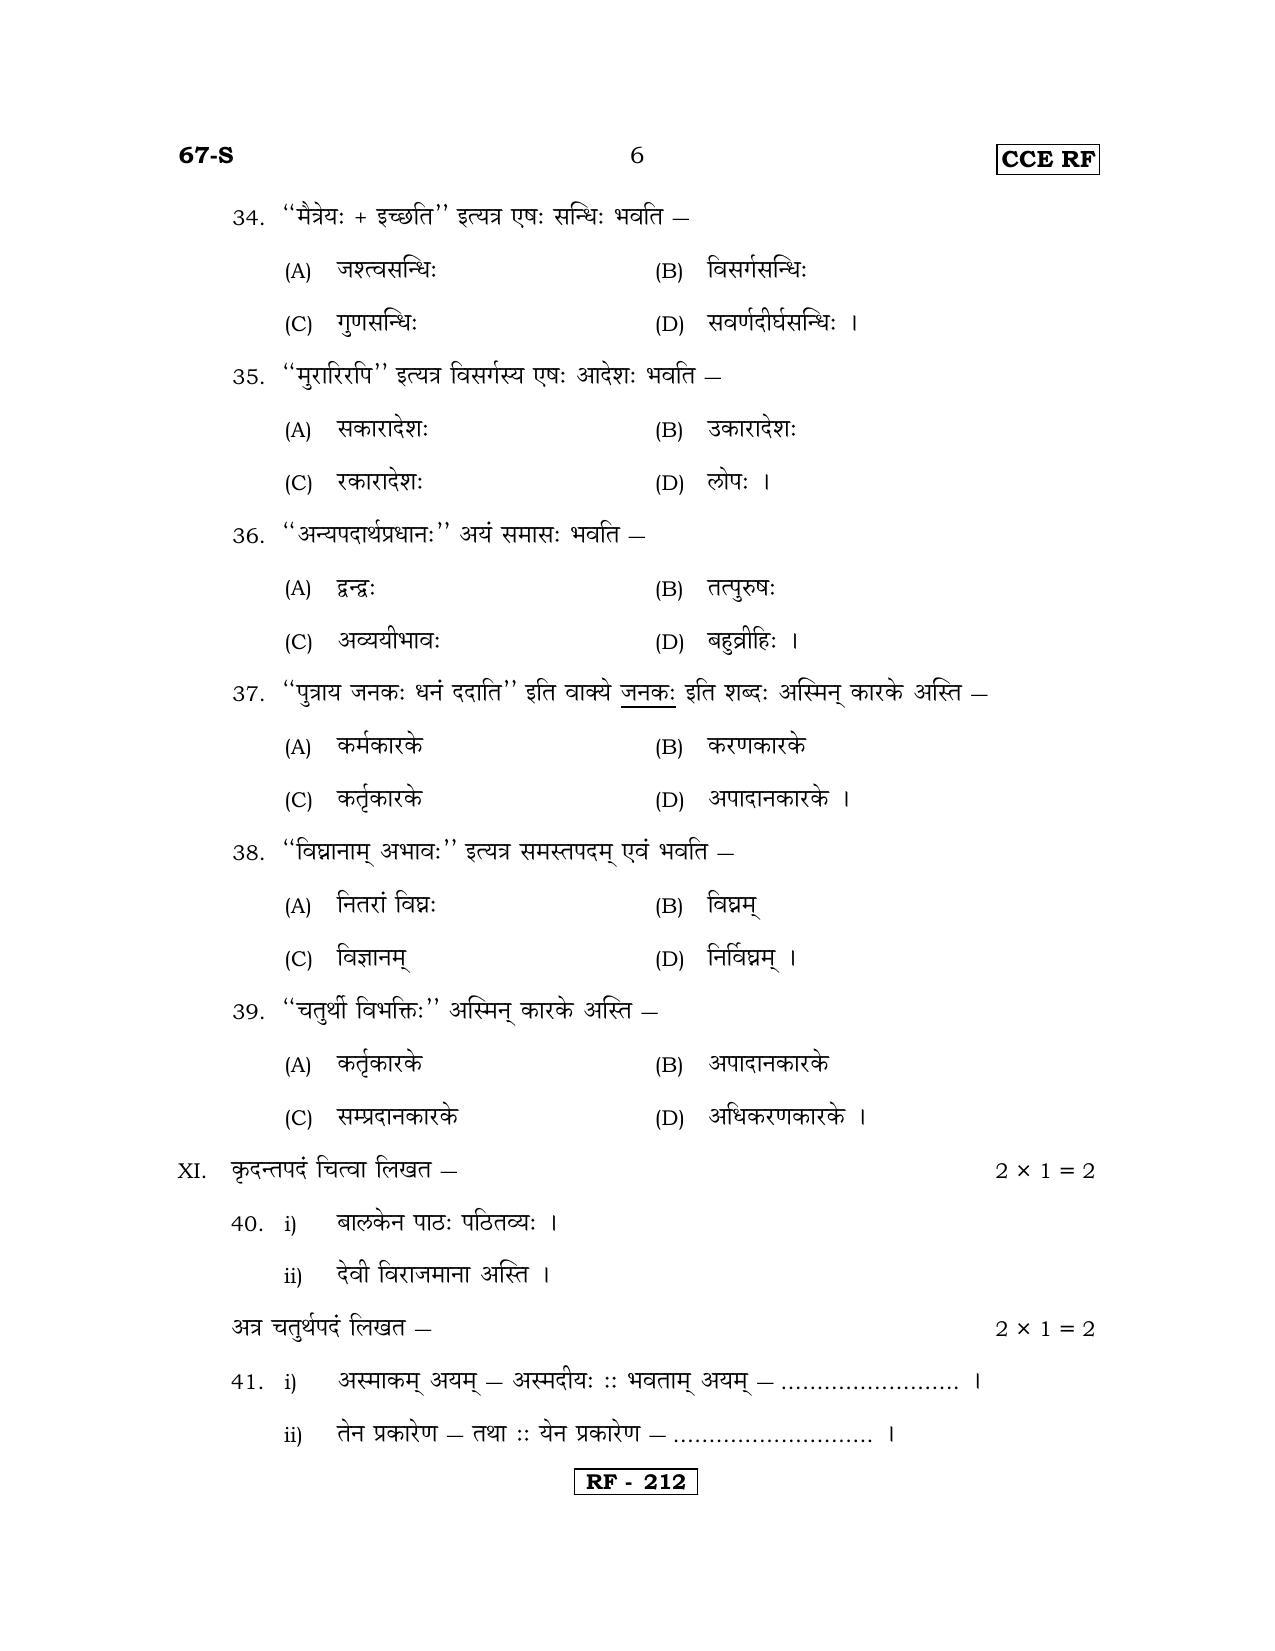 Karnataka SSLC Sanskrit - Third Language - SANSKRIT (67-S-CCE RF REVISED_39) April 2018 Question Paper - Page 6